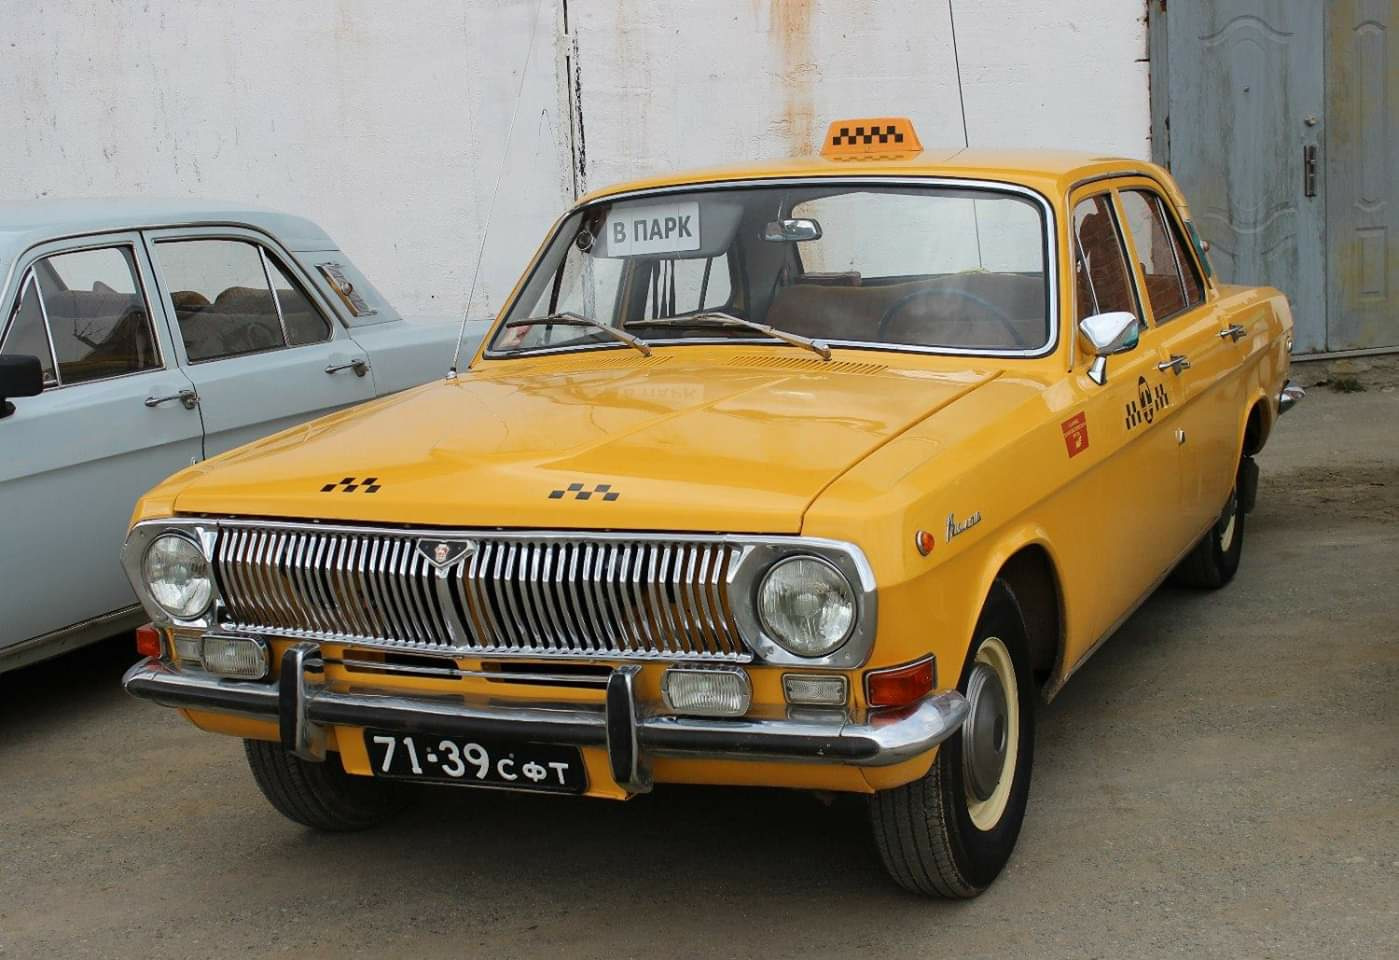 Старый таксопарк. Волга ГАЗ 24 такси СССР. ГАЗ 2401 Волга. ГАЗ 24 01. ГАЗ 24 01 Волга.